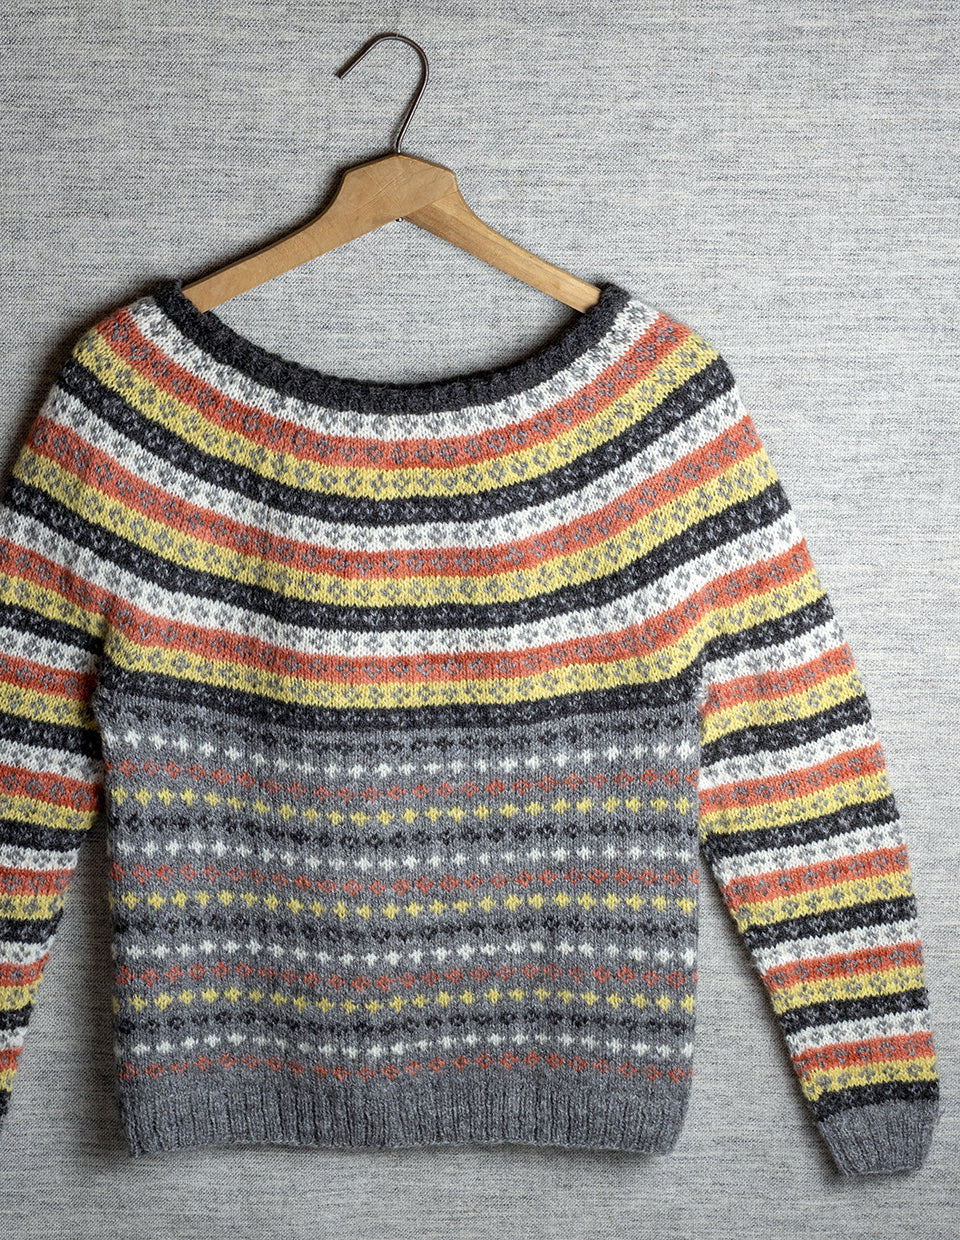 Stjernestripe sweater, 2-ply, knitting kit